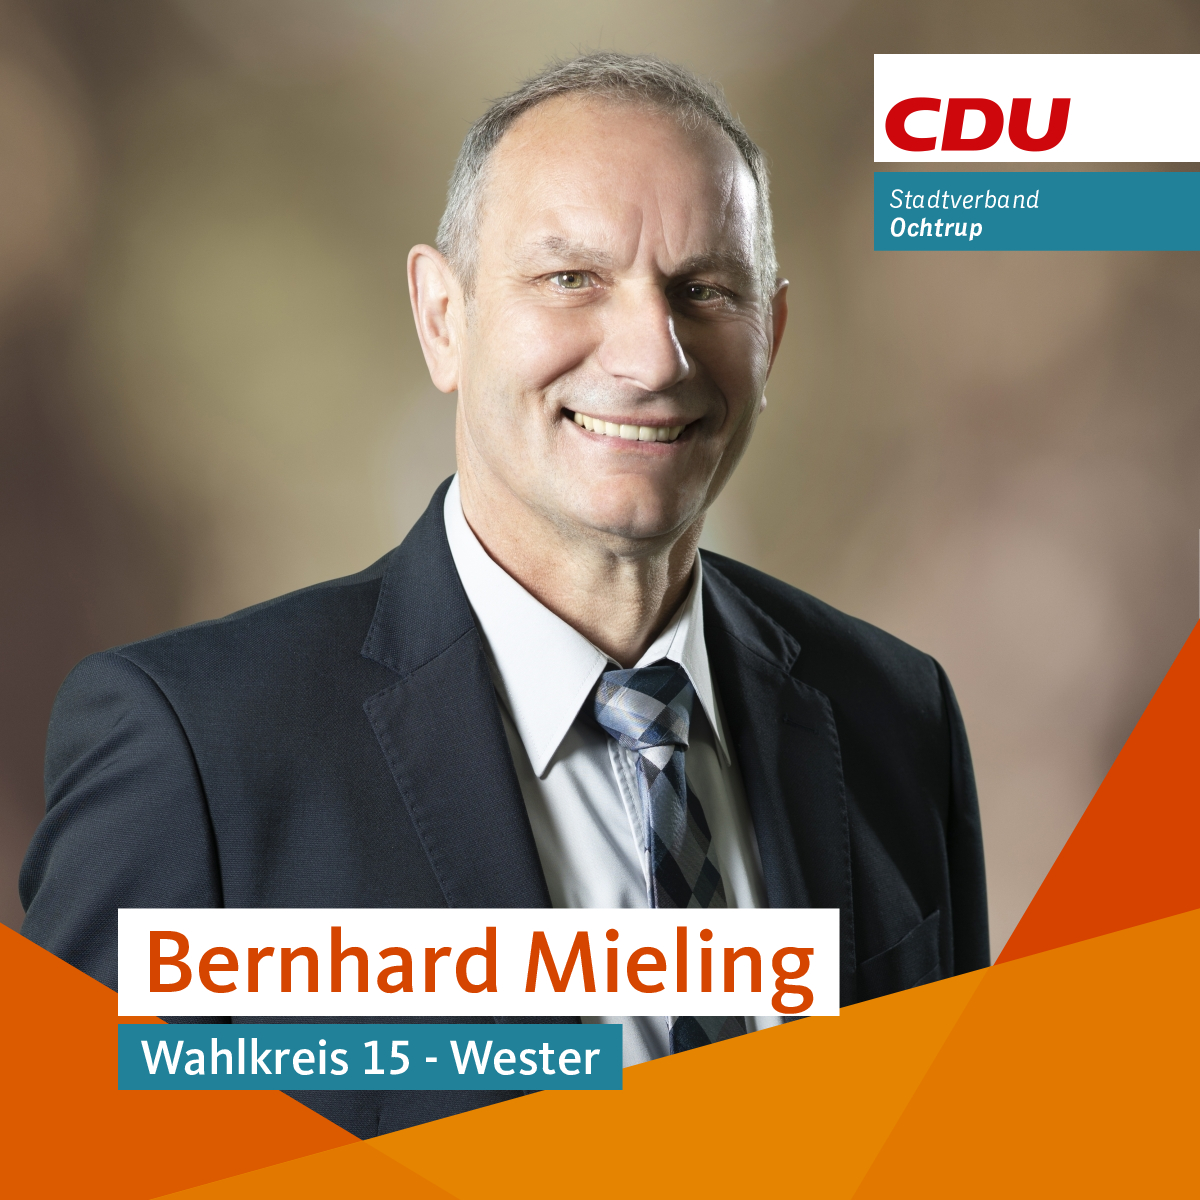 Mieling, Bernhard (CDU)